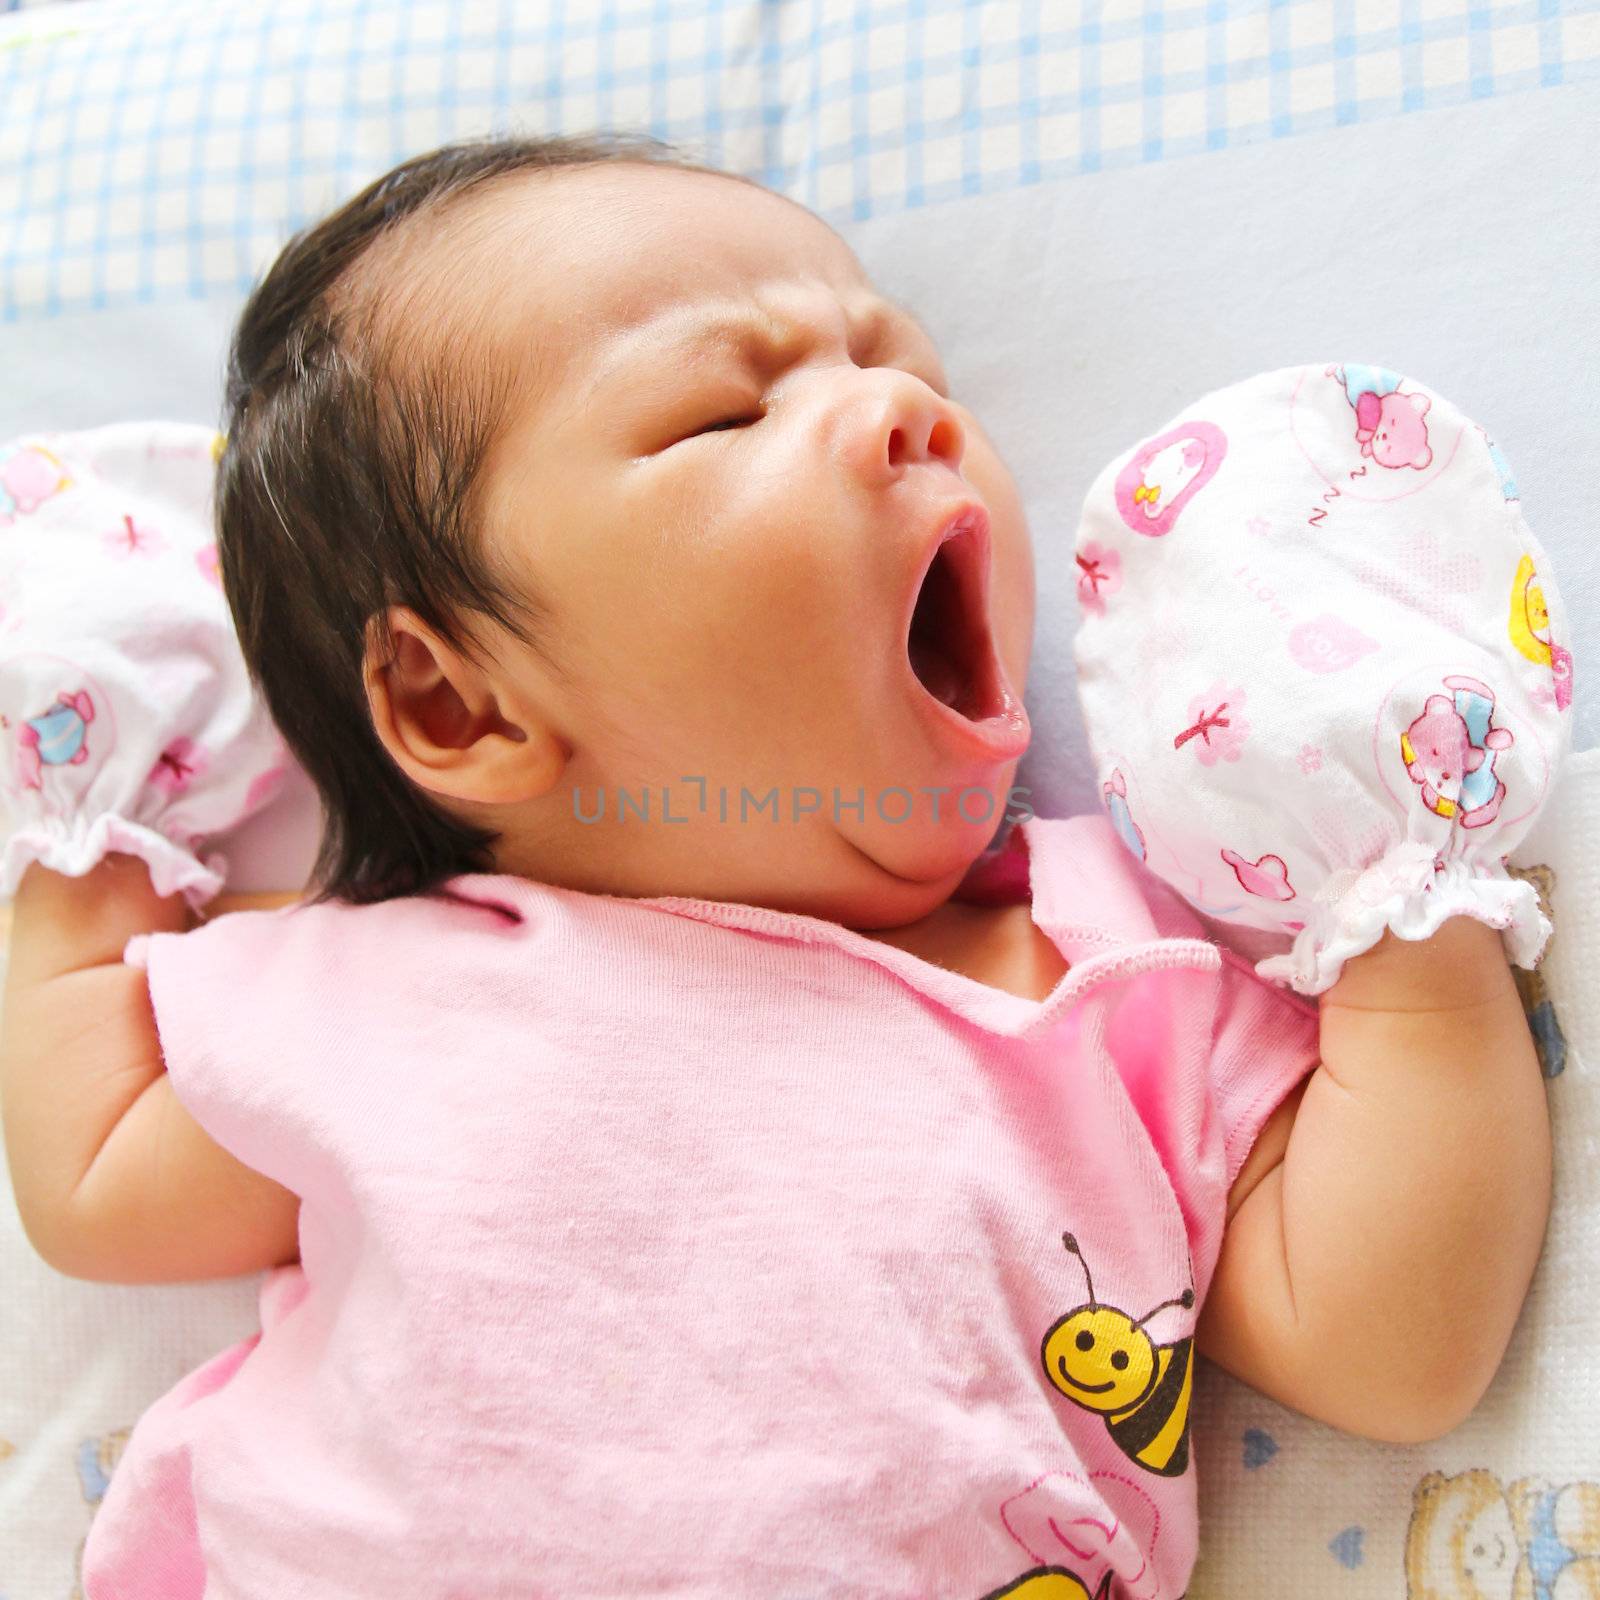 Newborn Asian baby girl lies on a blanket